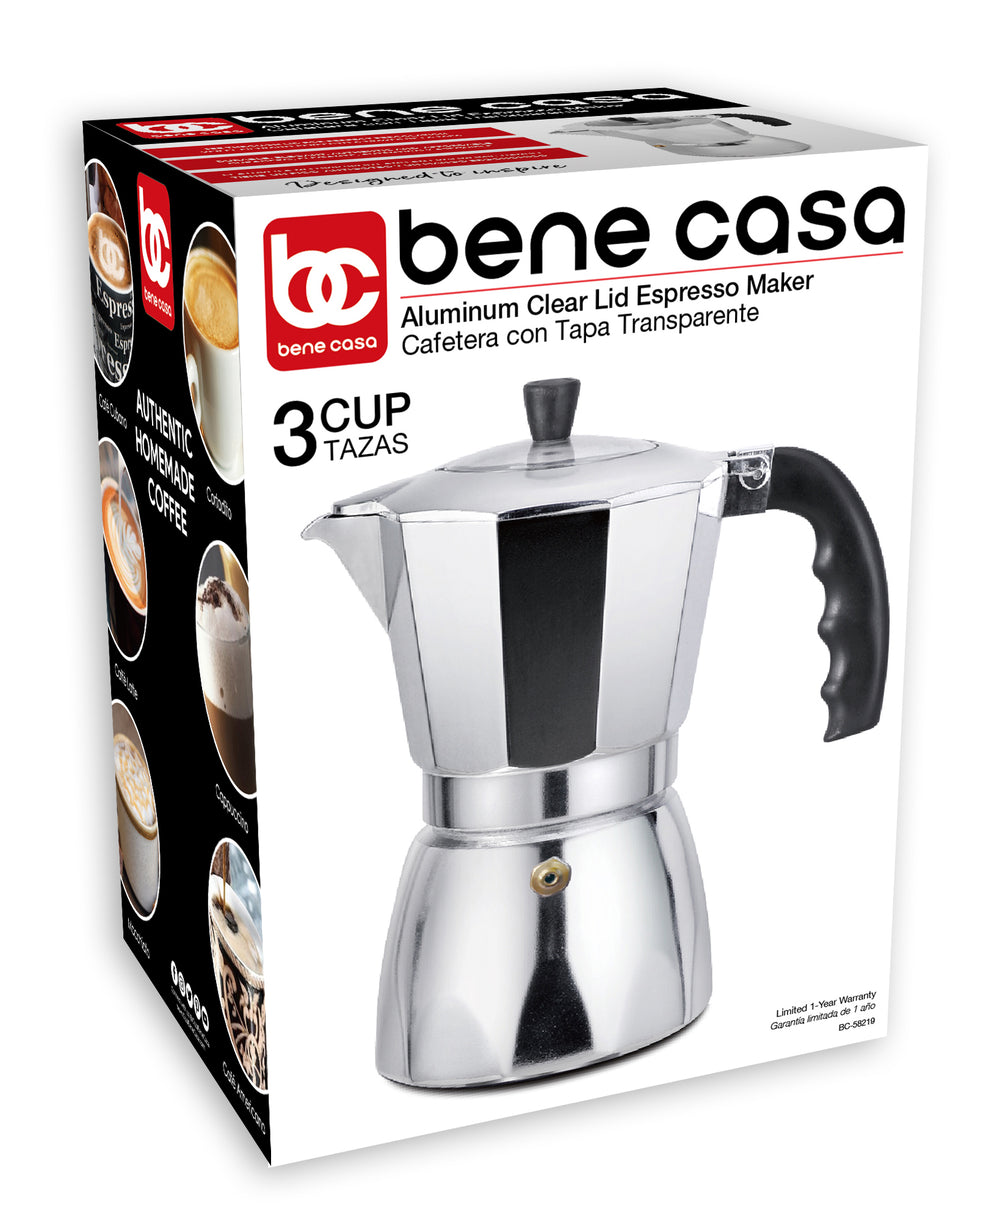 Bene Casa aluminum 3-cup espresso maker with see through lid, authentic espresso maker, easy pour, dishwasher safe stove top espresso maker